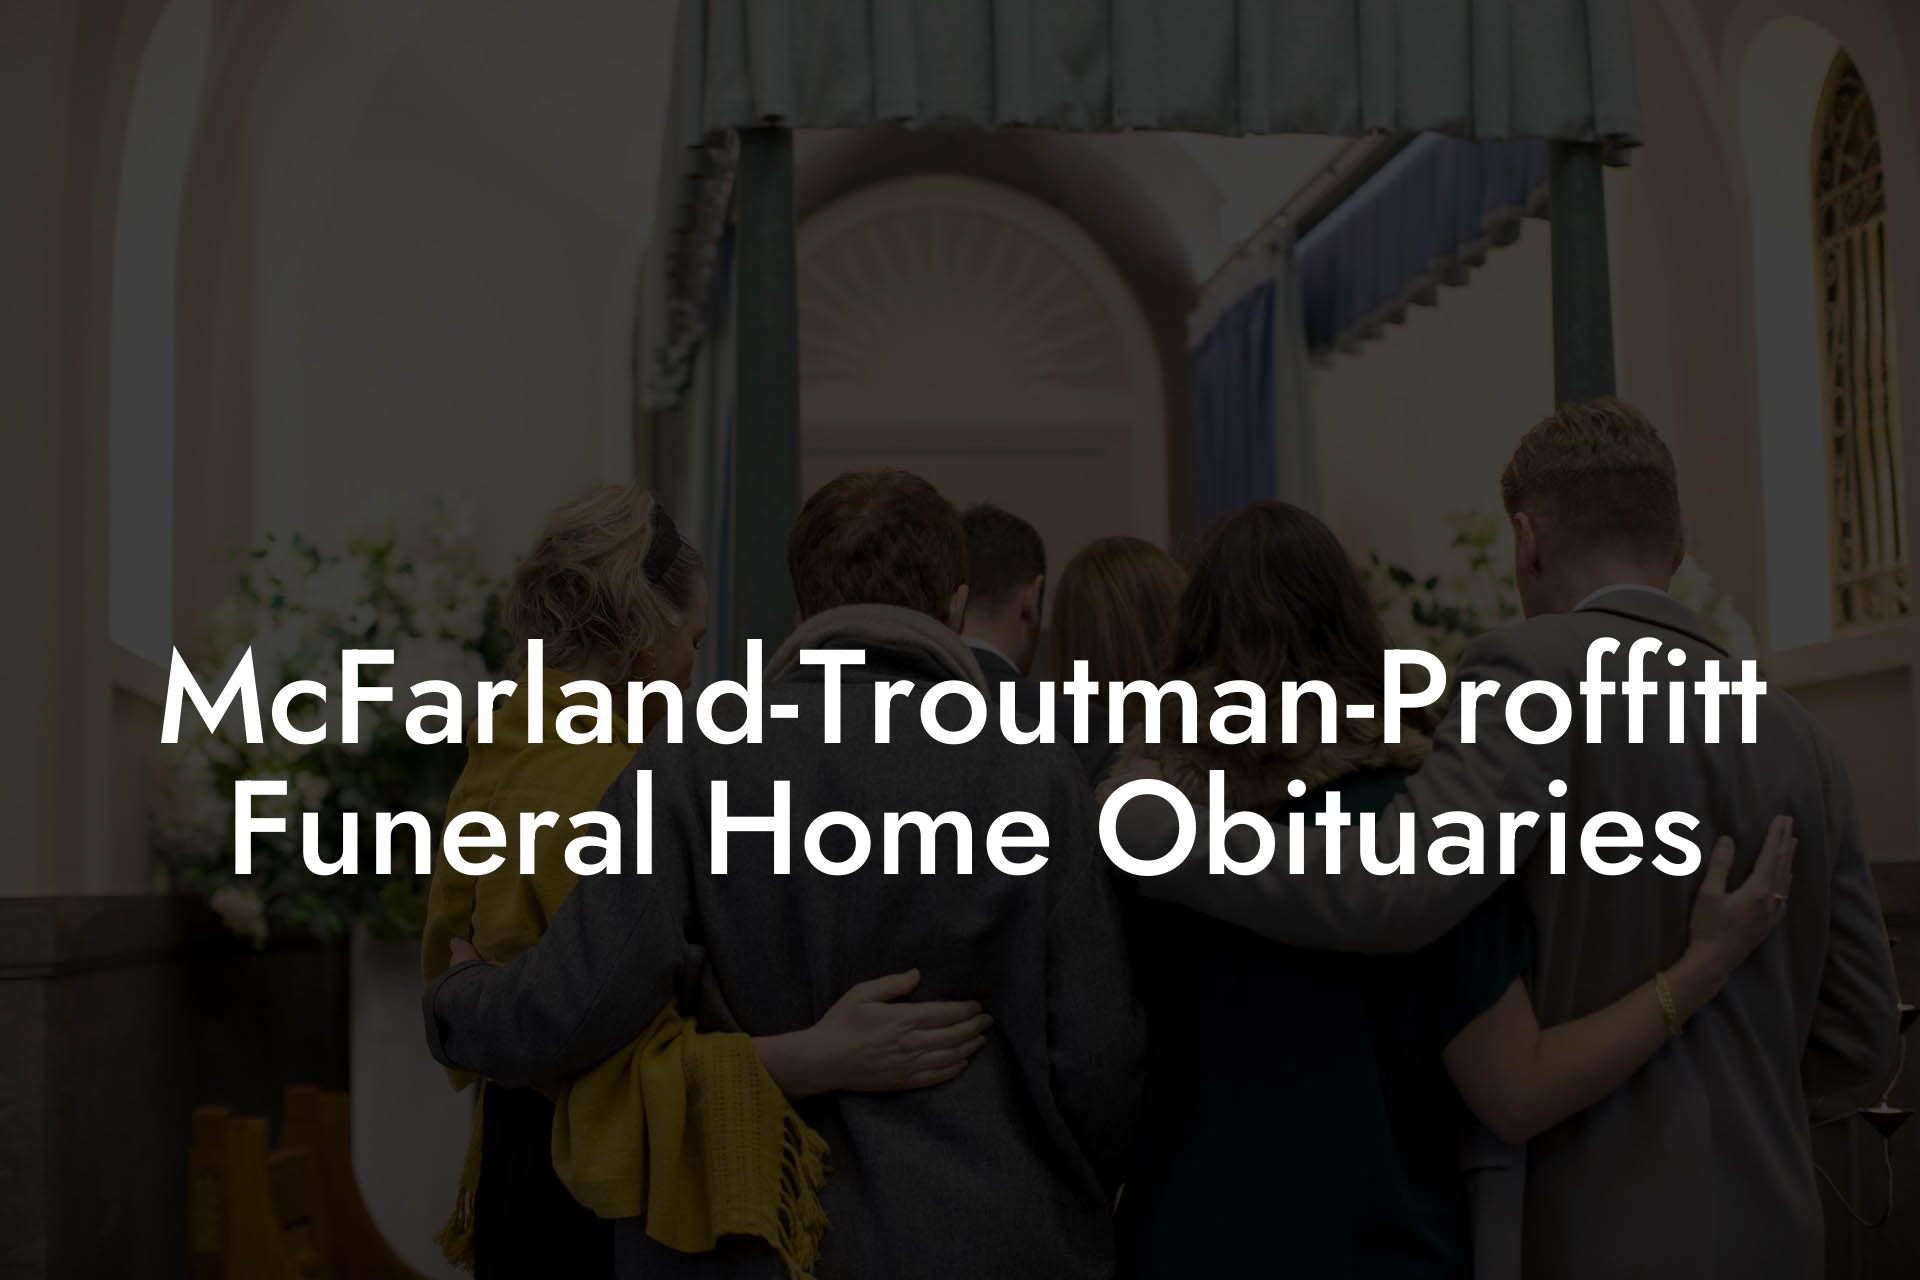 McFarland-Troutman-Proffitt Funeral Home Obituaries